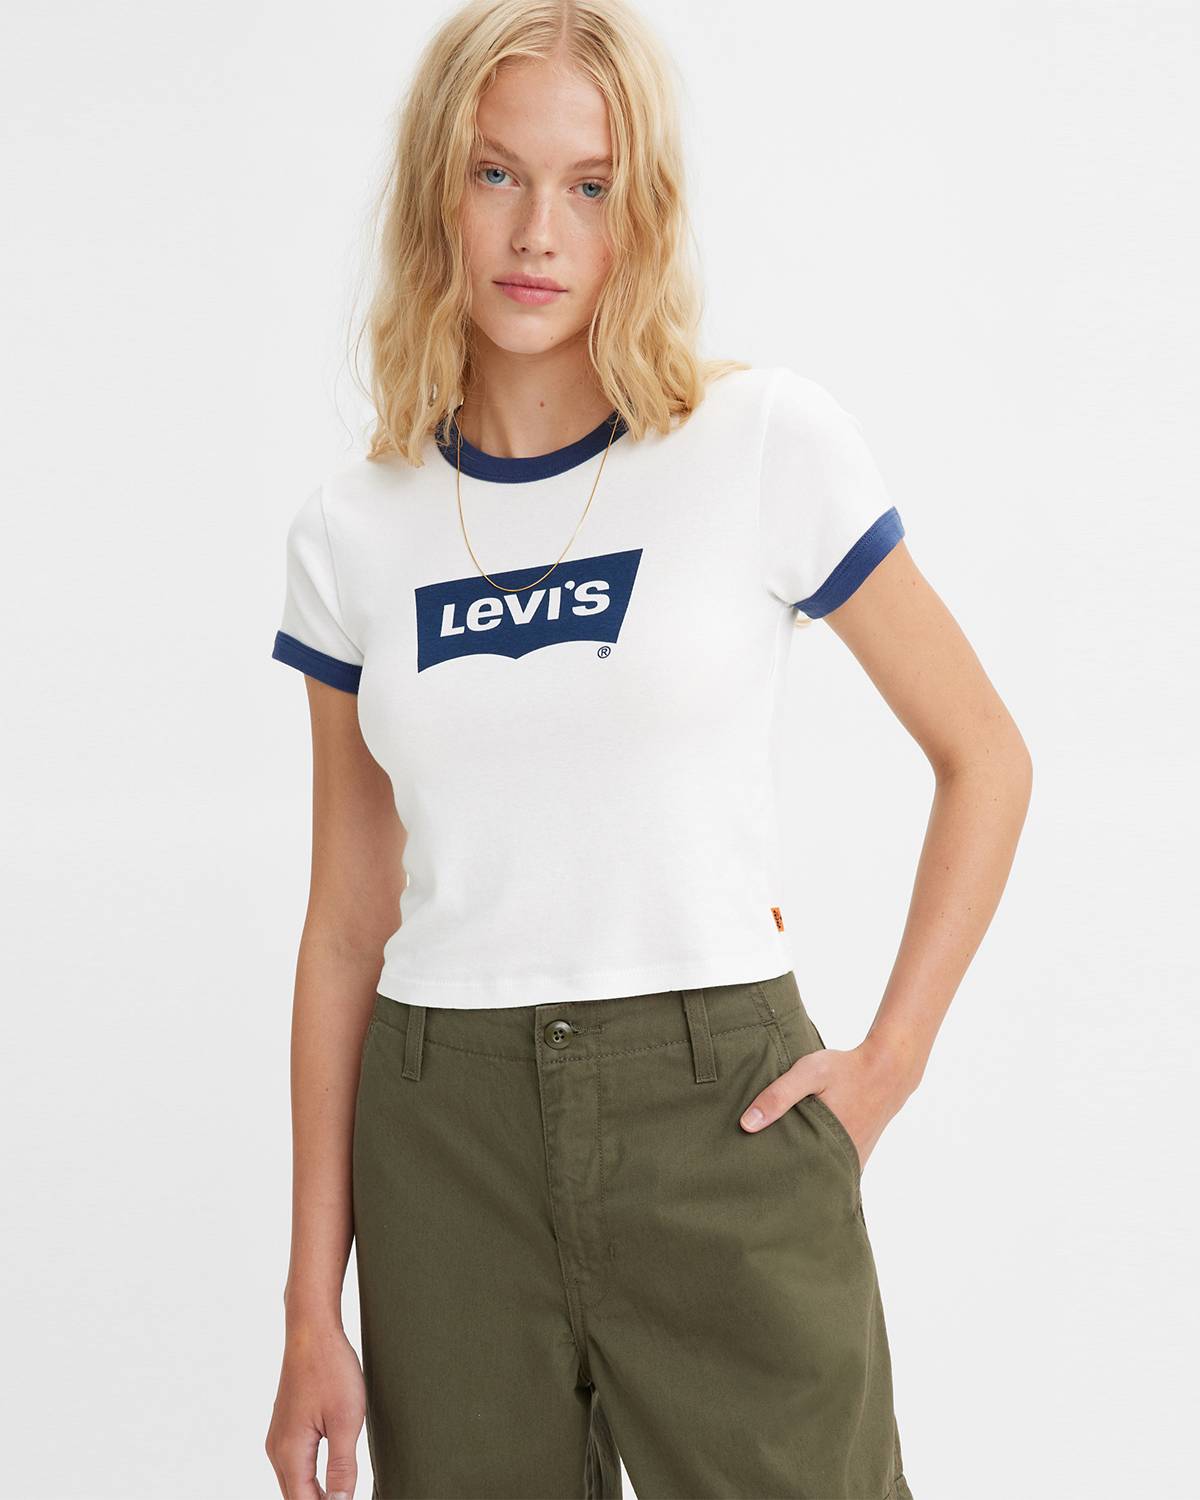 Women's Slim Shirts, Blouses & Tops